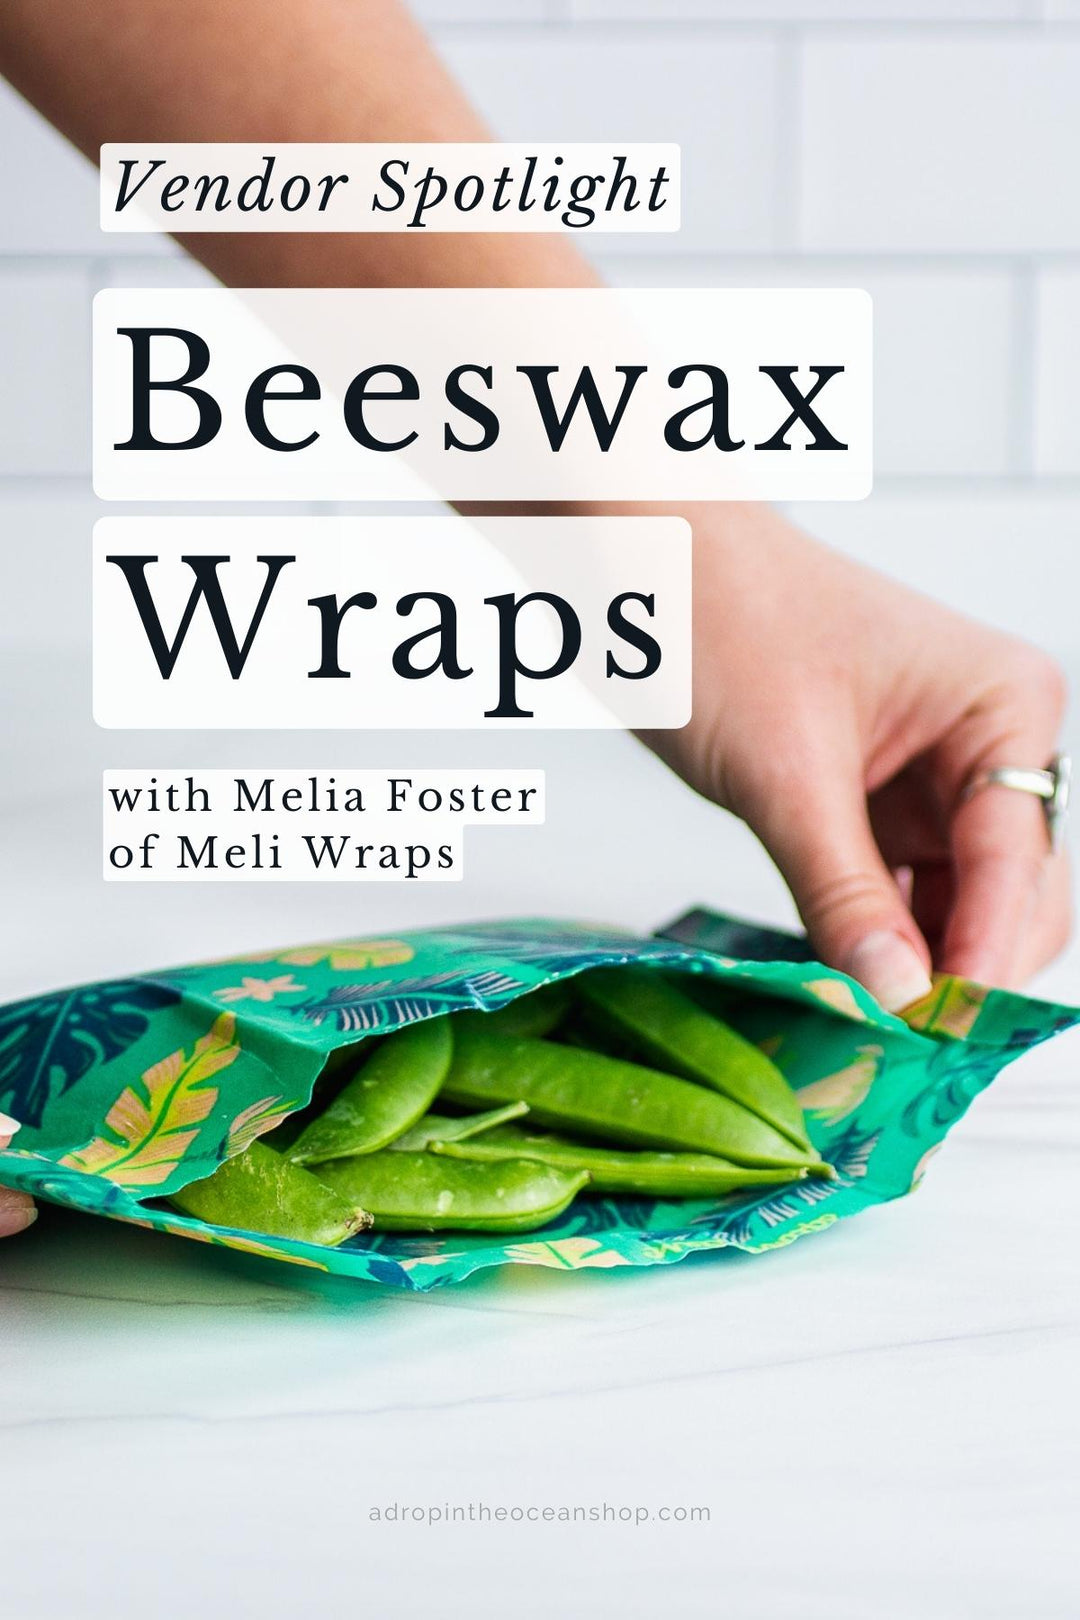 A Drop in the Ocean Tacoma Zero Waste Store Vendor Spotlight with Meli Wraps Beeswax Wraps